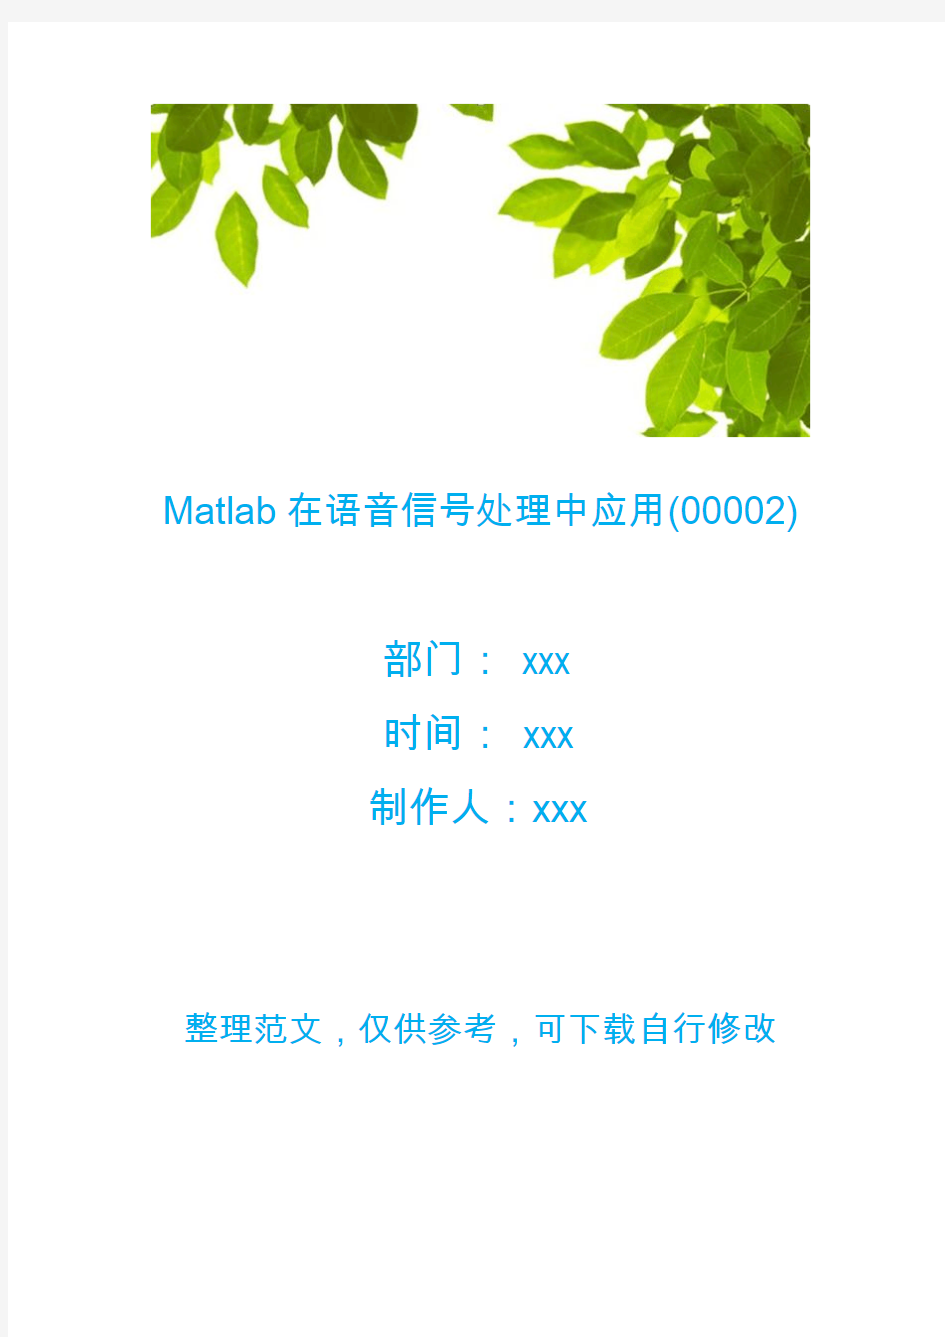 Matlab在语音信号处理中应用(00002)